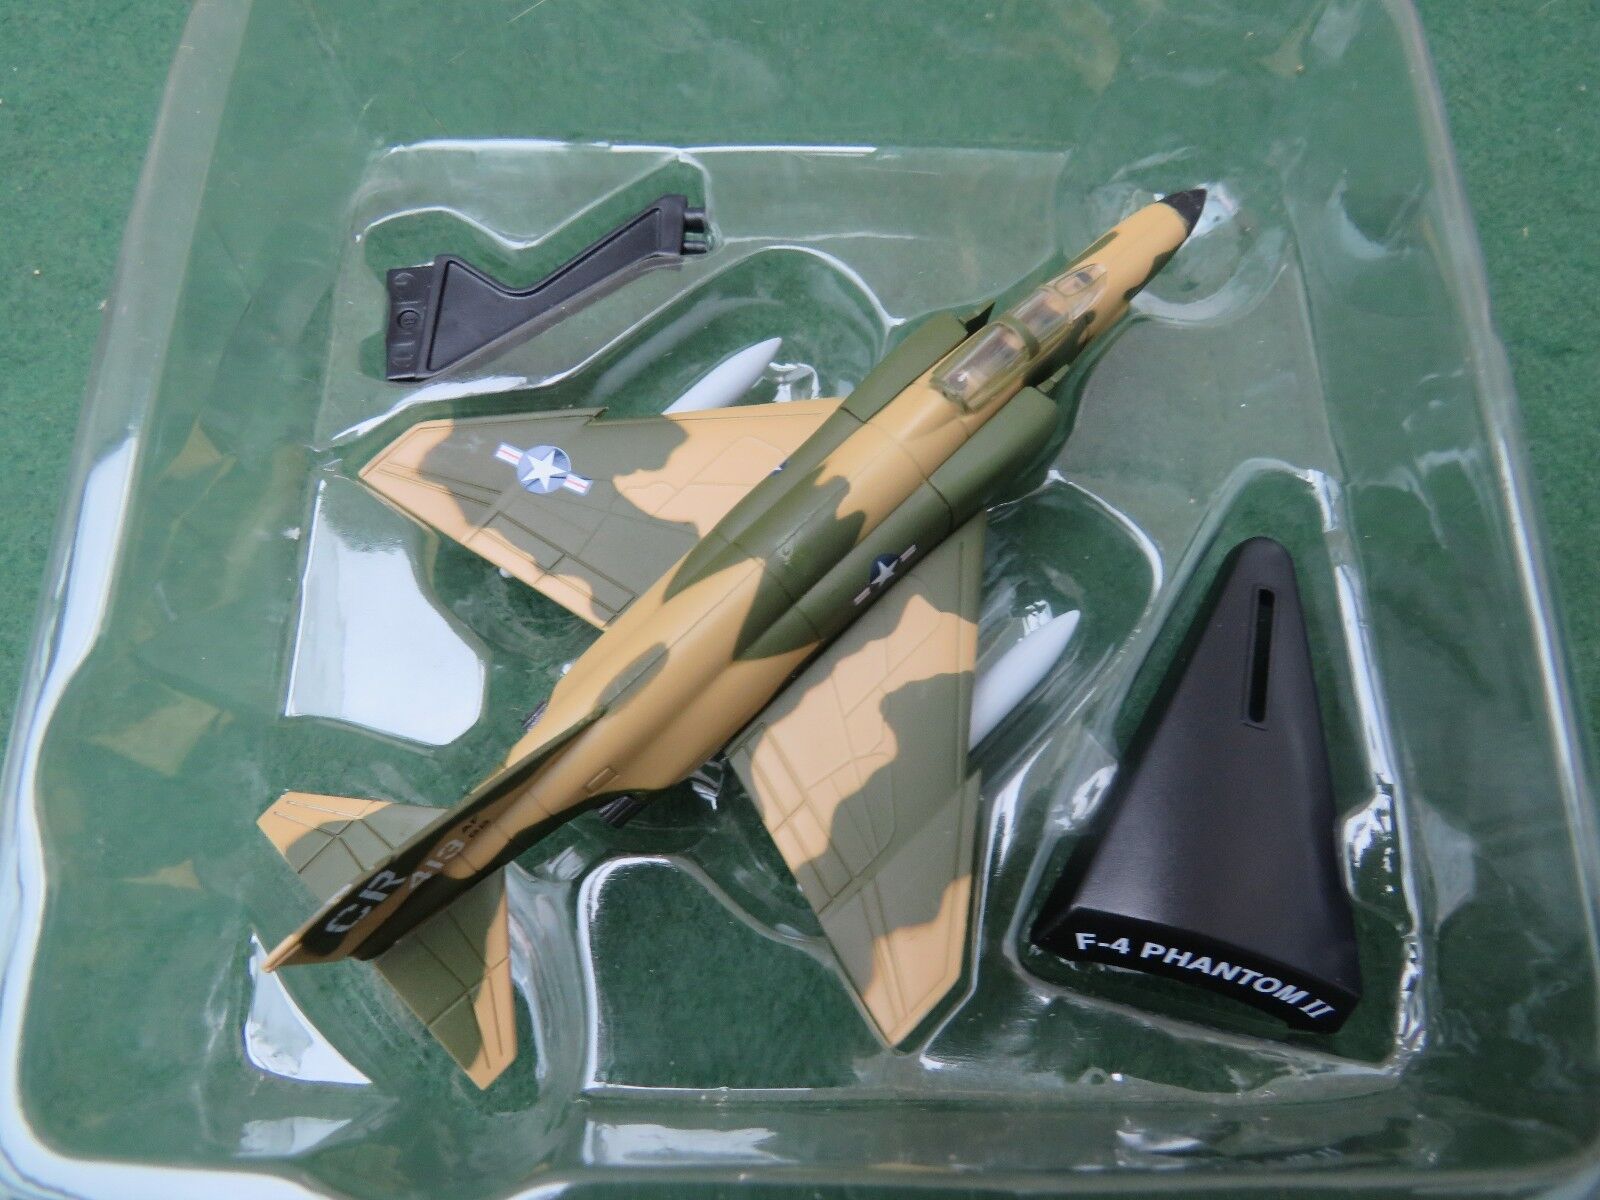 DEL PRADO AIRCRAFT OF THE ACES F-4 PHANTOM II 1/100 SCALE MODEL